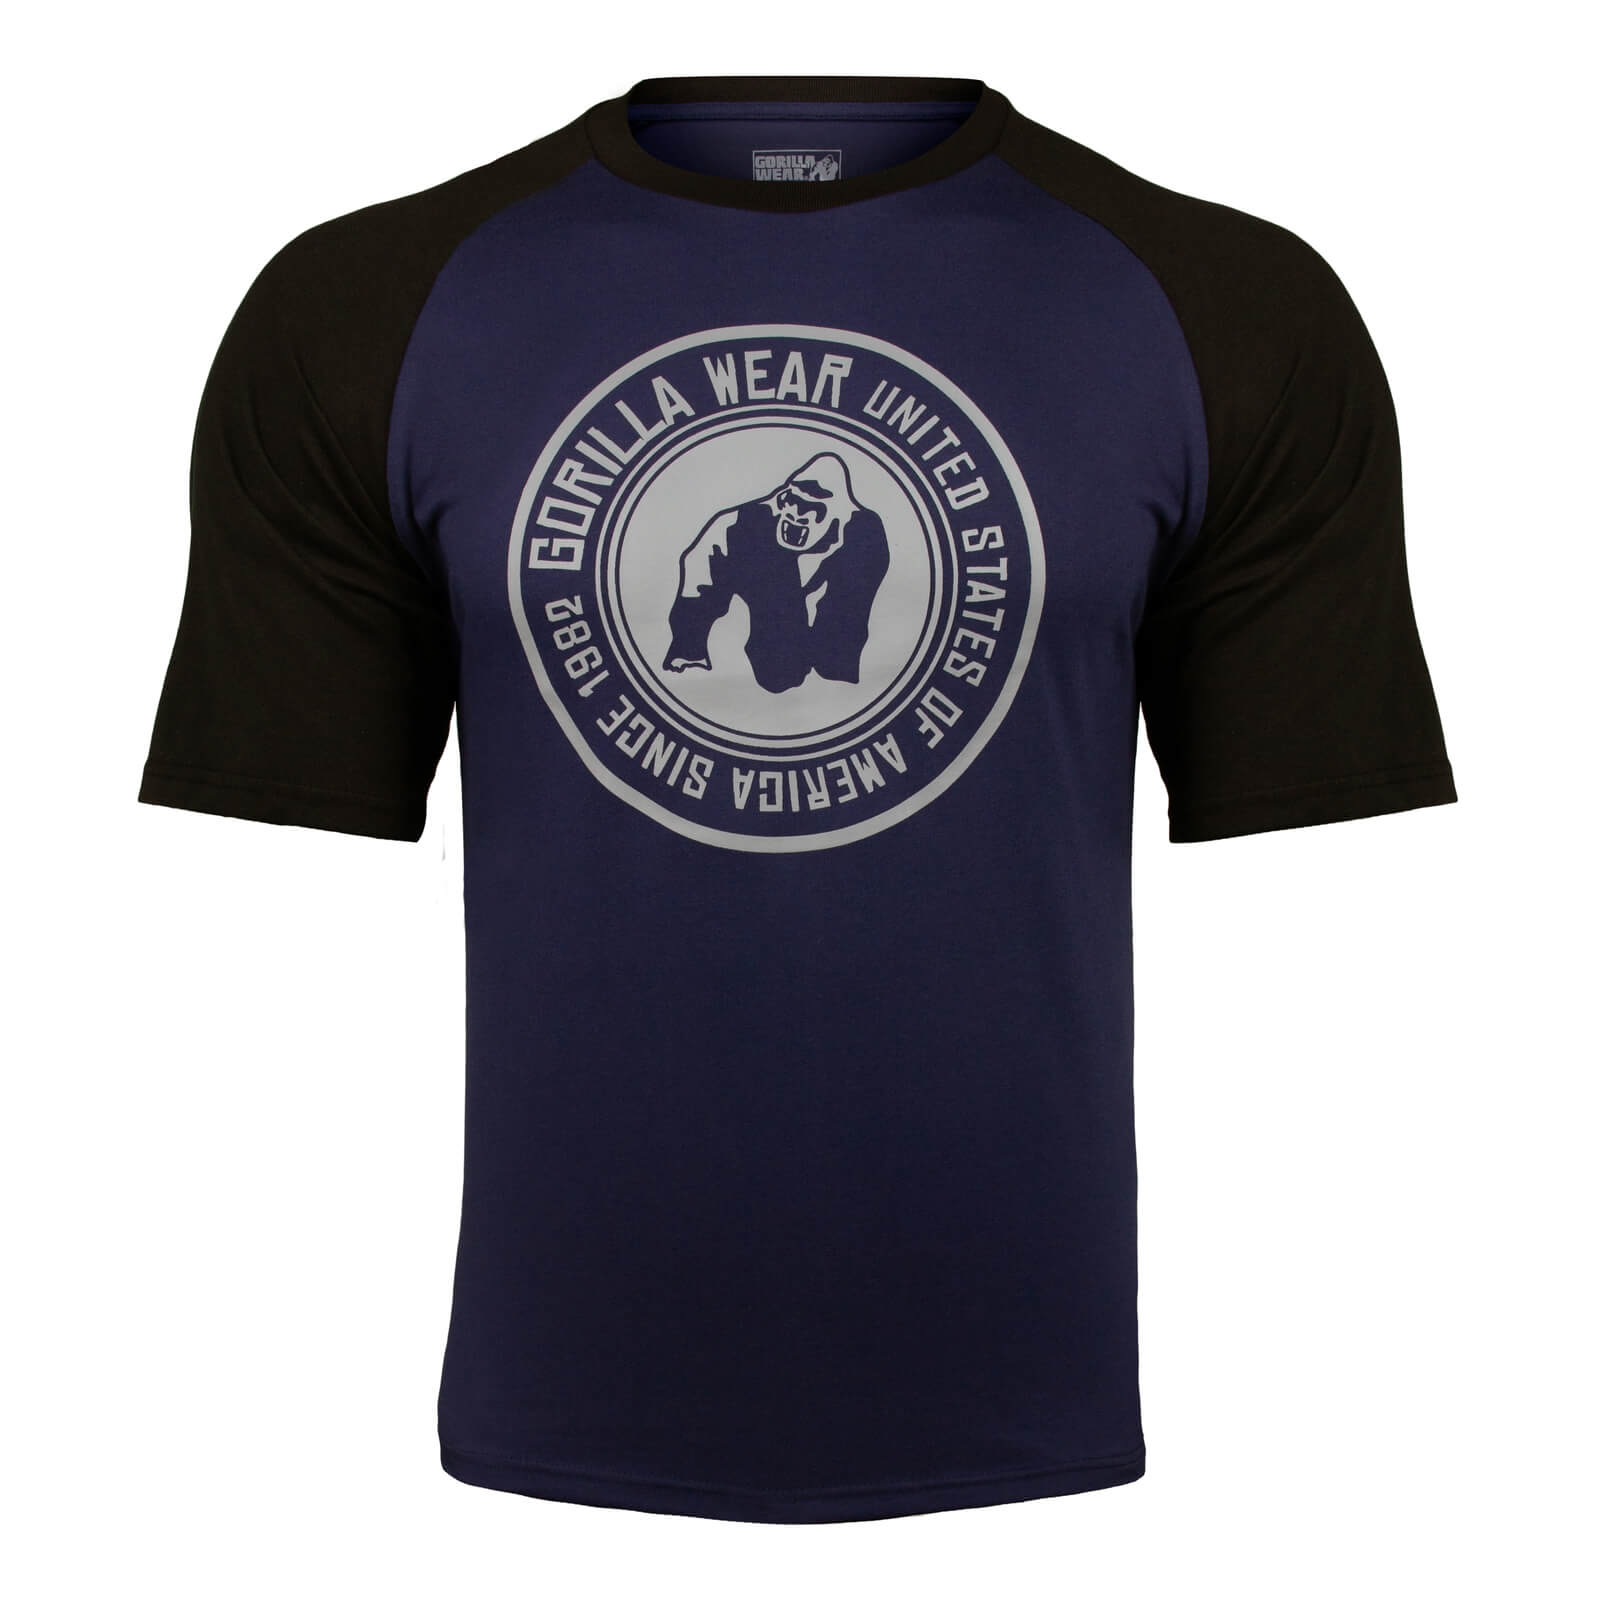 Sjekke Texas T-Shirt, navy/black, Gorilla Wear hos SportGymButikken.no